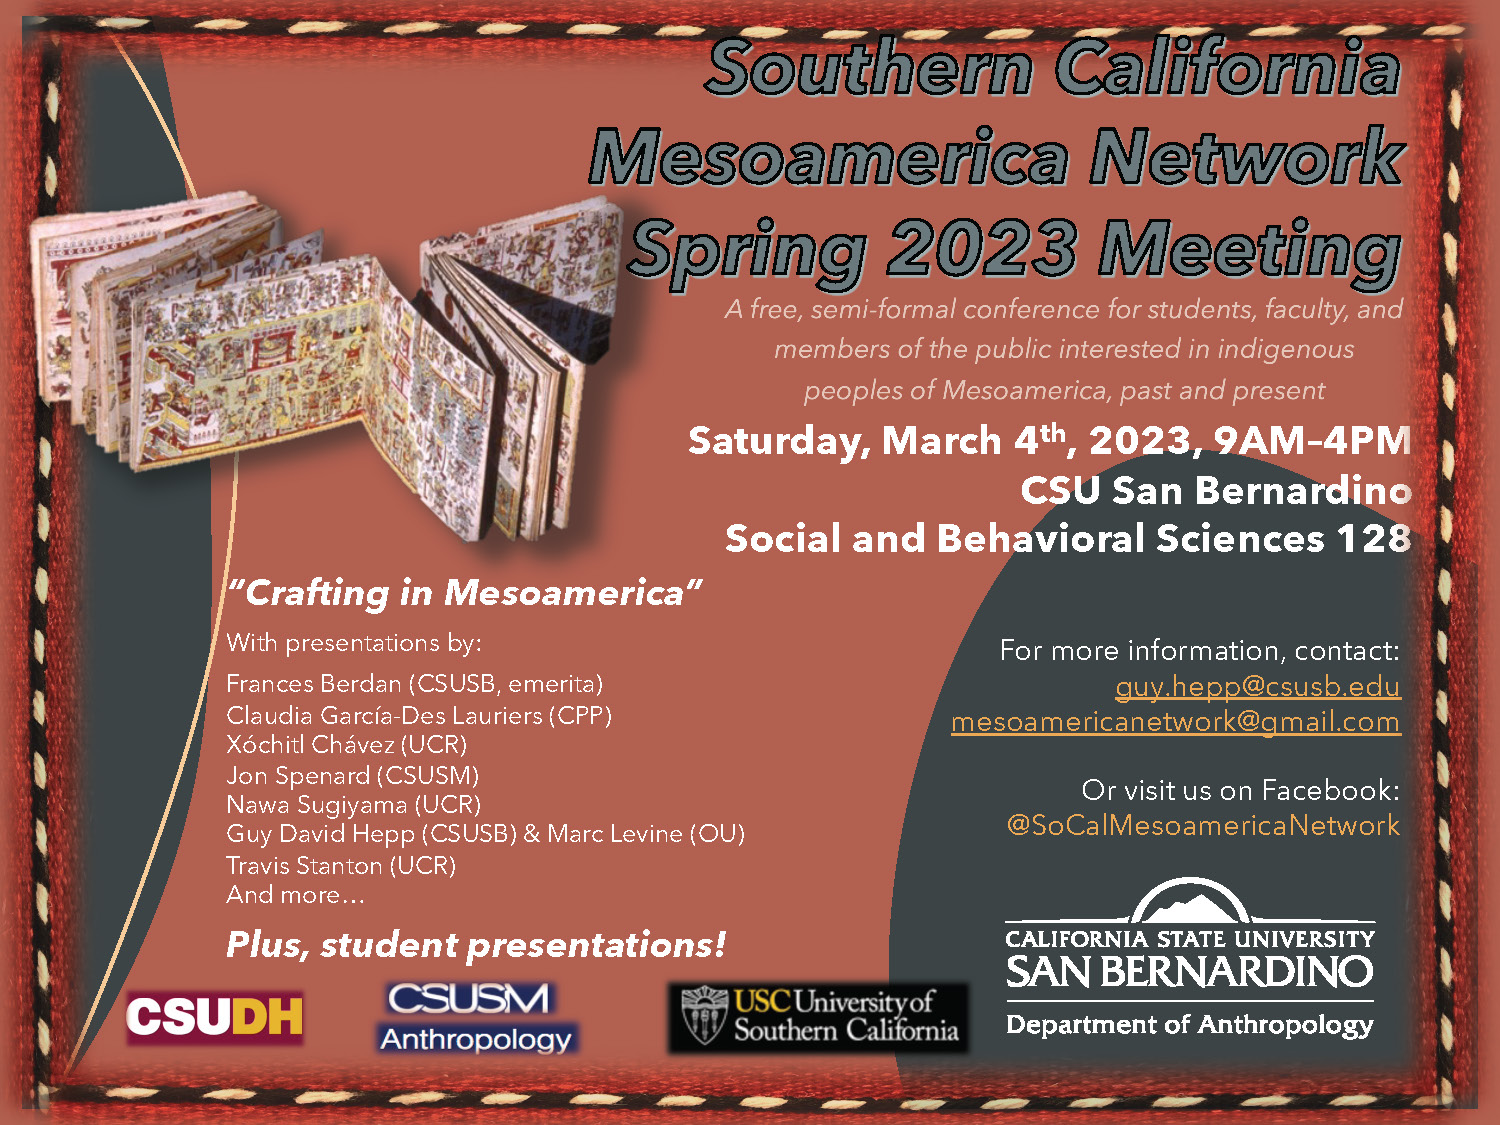 SoCal Mesoamerica Network 2023 Spring Meeting flyer